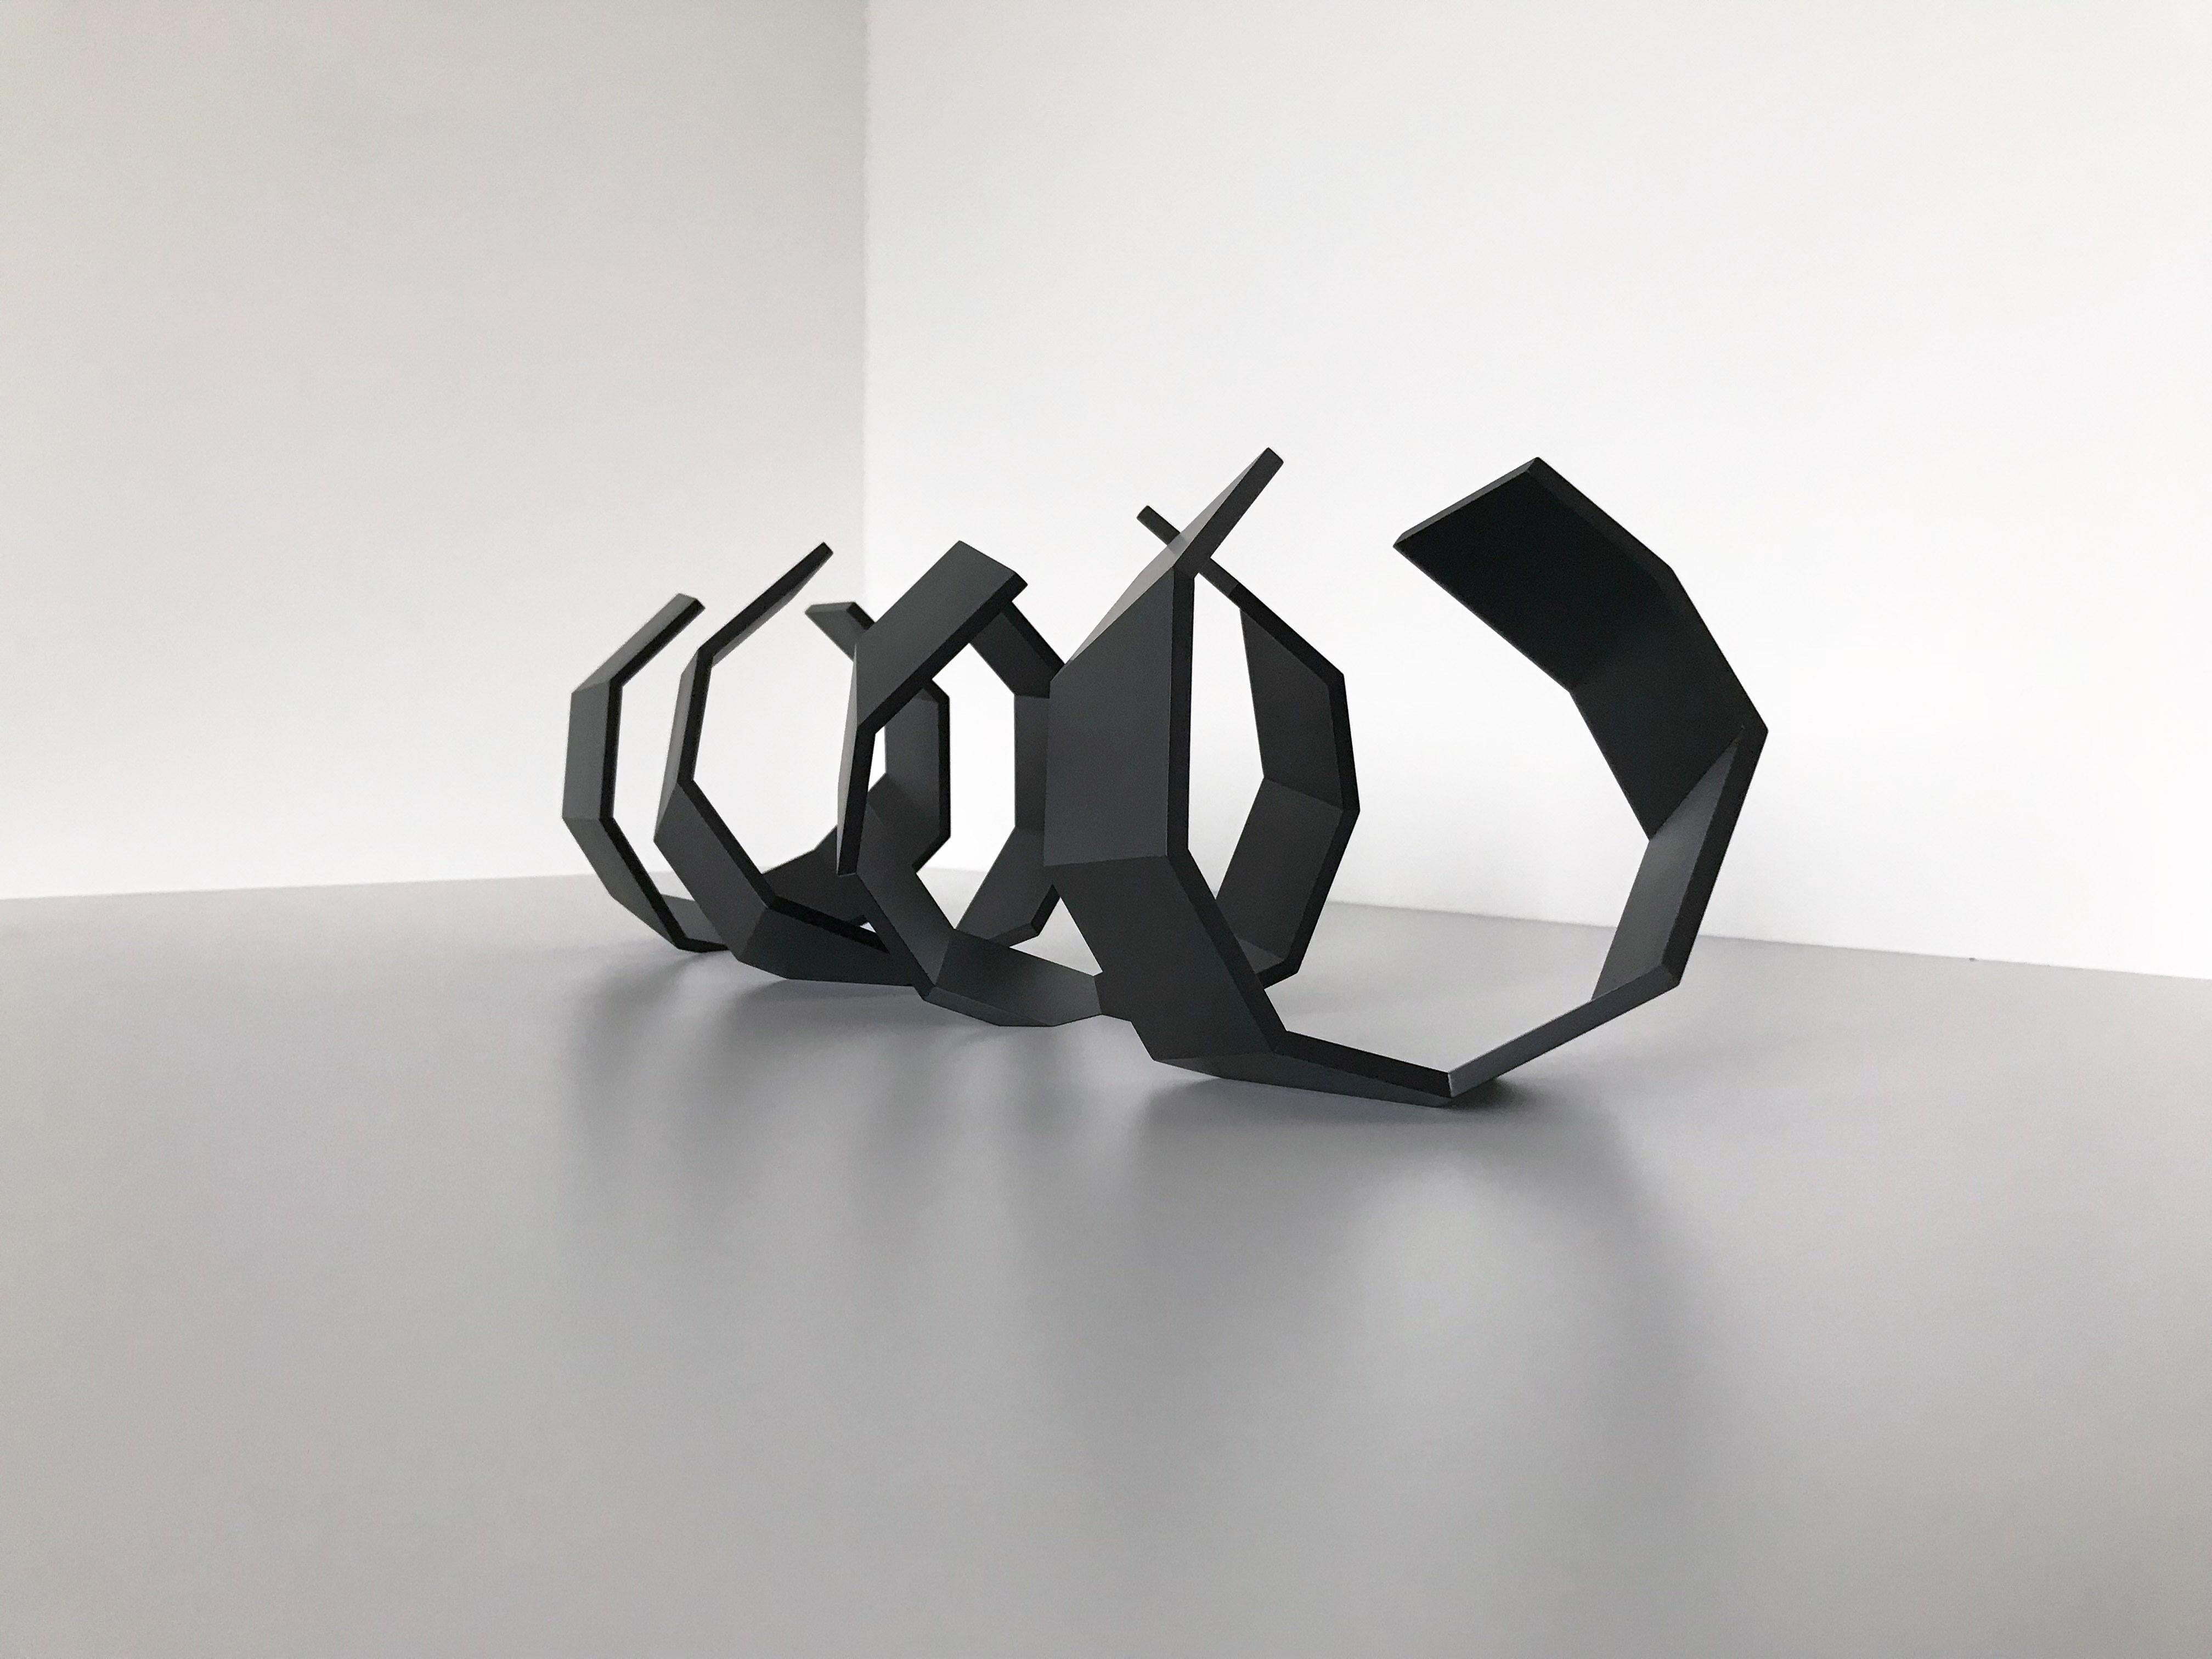 Untitled (black octagons) - Sculpture by Thomas Lendvai